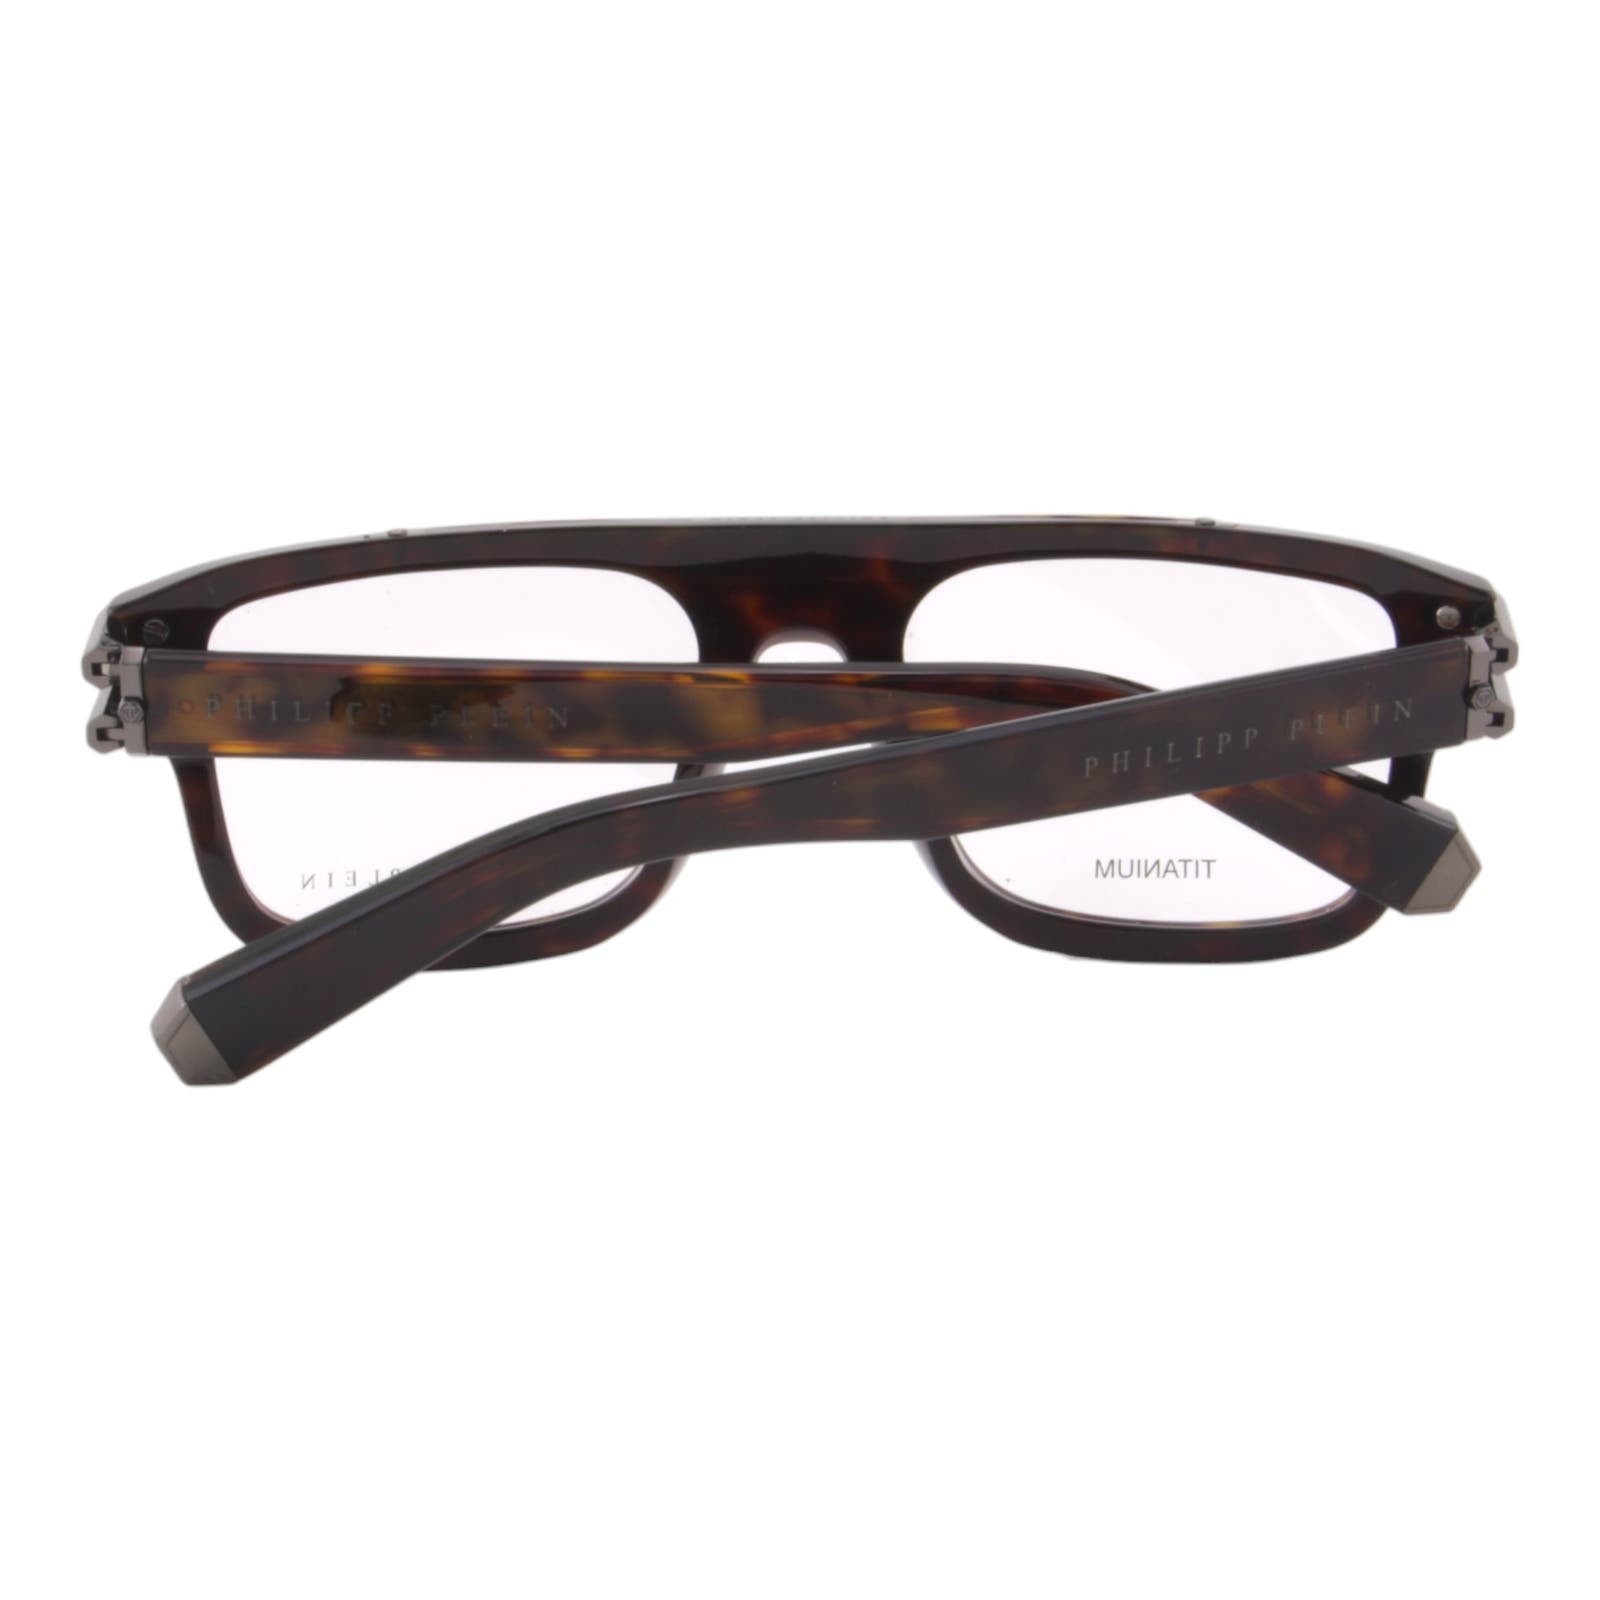 Men Square Glasses VPP021M-0722 Havana Brown Gunmetal Titanium Optical Frame